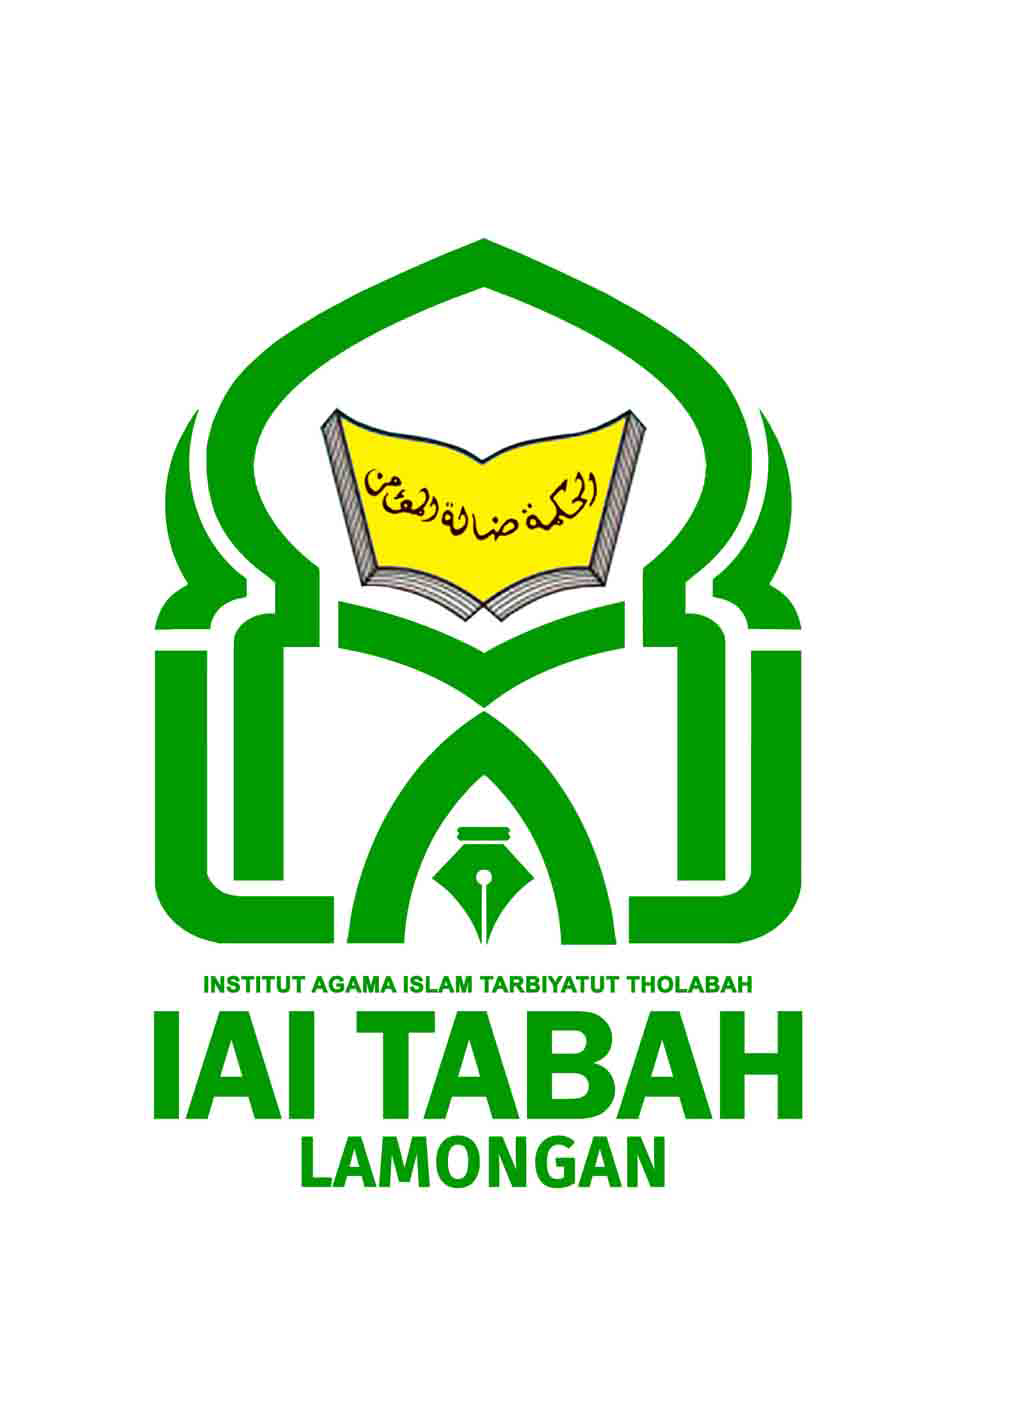 Institut Agama Islam Tarbiyatut Tholabah Lamongan